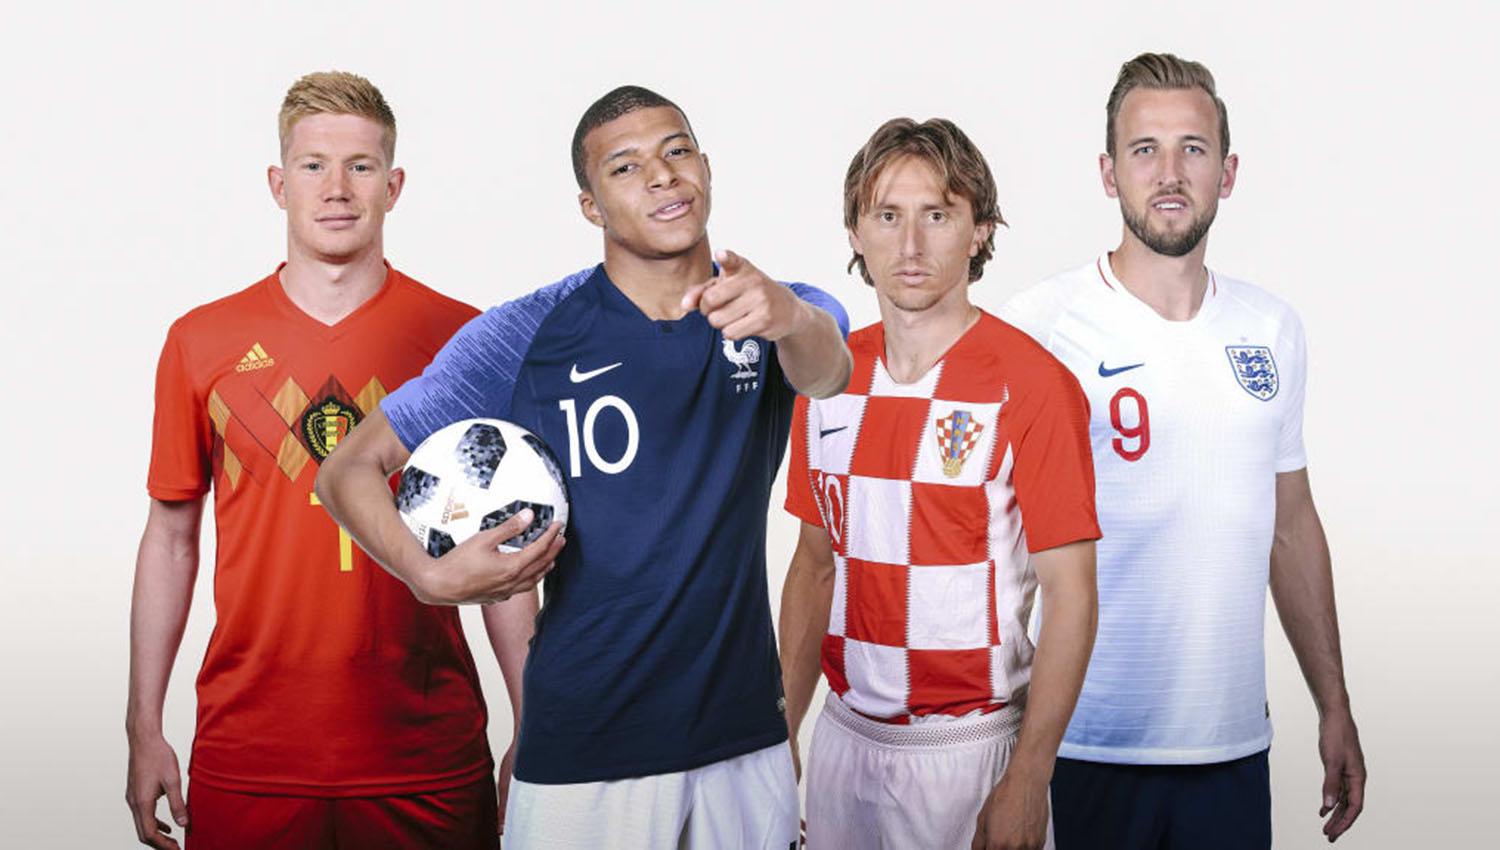 Cuatro aseus: Kevin De Bruyne (Bélgica), Kylian Mbappé (Francia), Luka Modric (Croacia) y Harry Kane (Inglaterra).
IMAGEN TOMAD DE ES.FIFA.COM